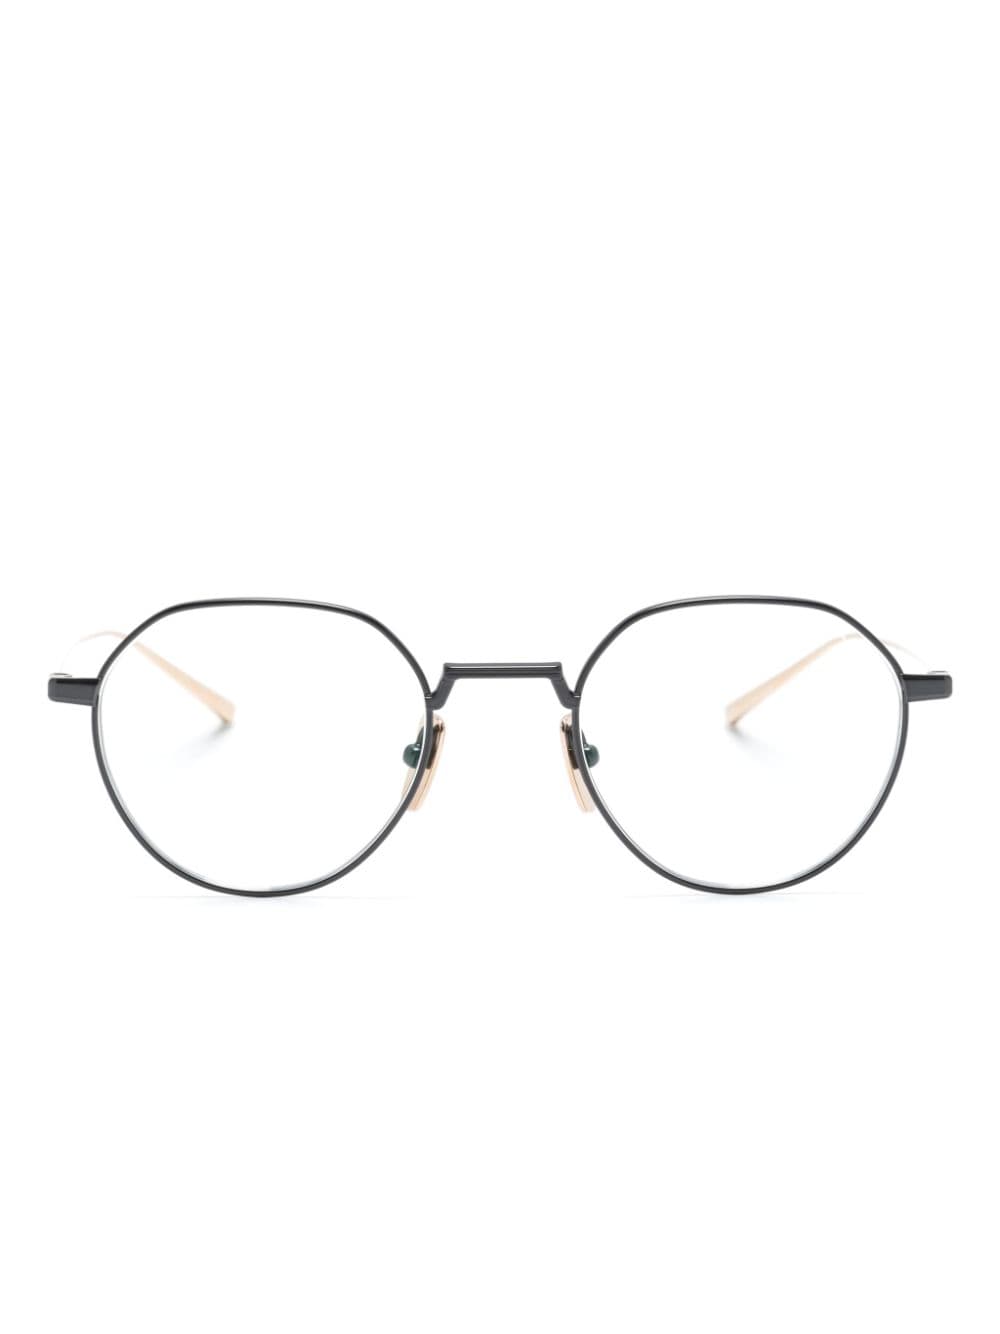 Dita Eyewear Artoa 82 Brille Mit Rundem Gestell In Grau